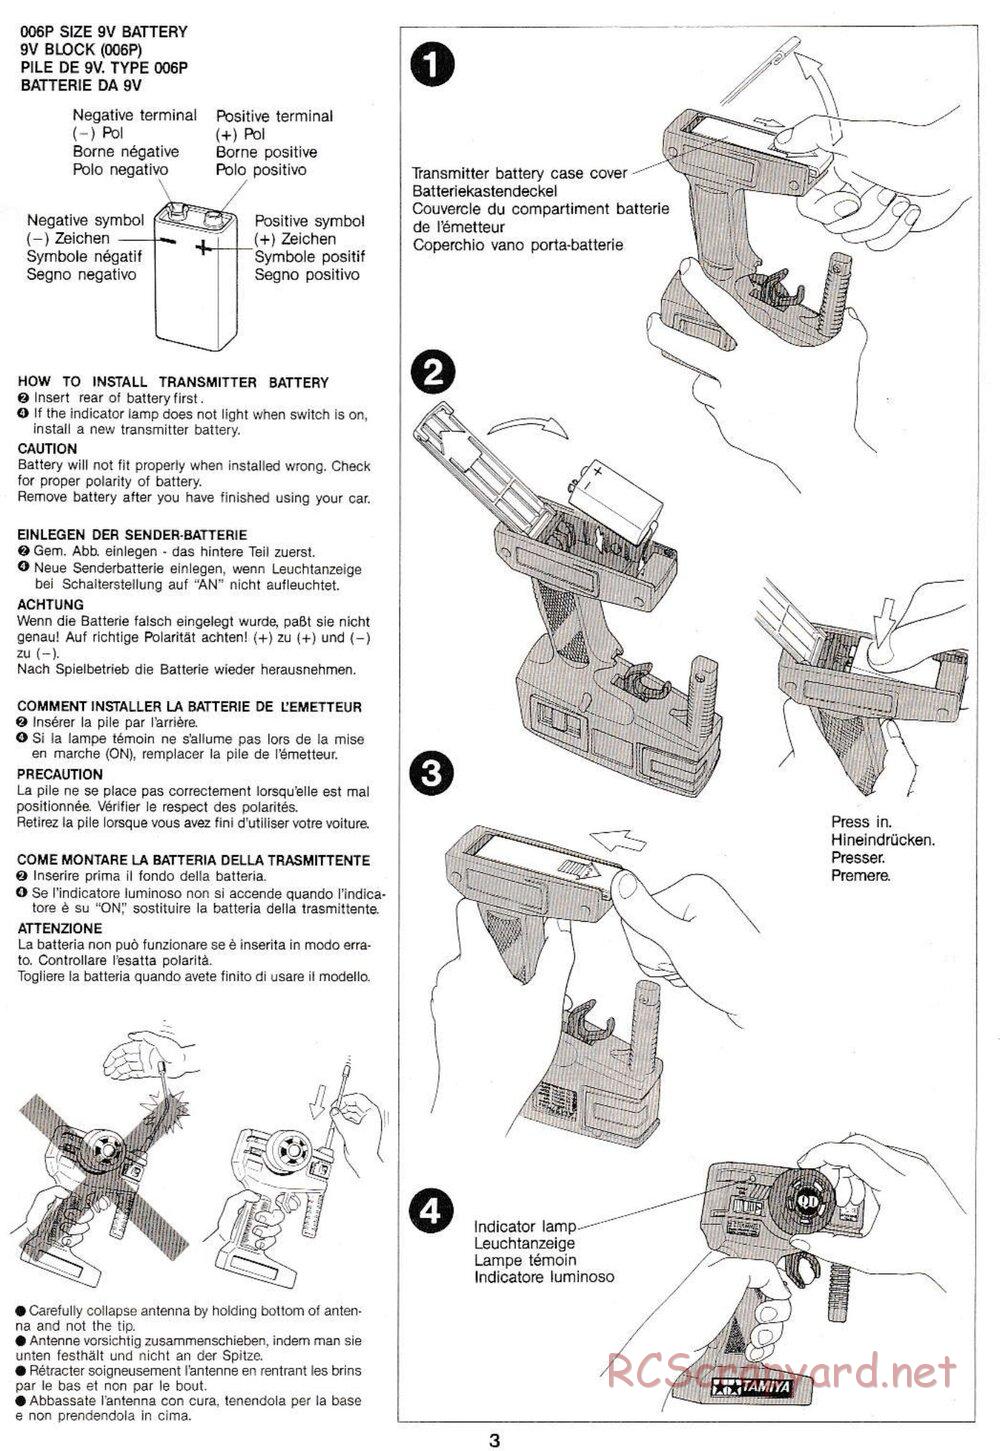 Tamiya - Clod Buster QD Chassis - Manual - Page 3